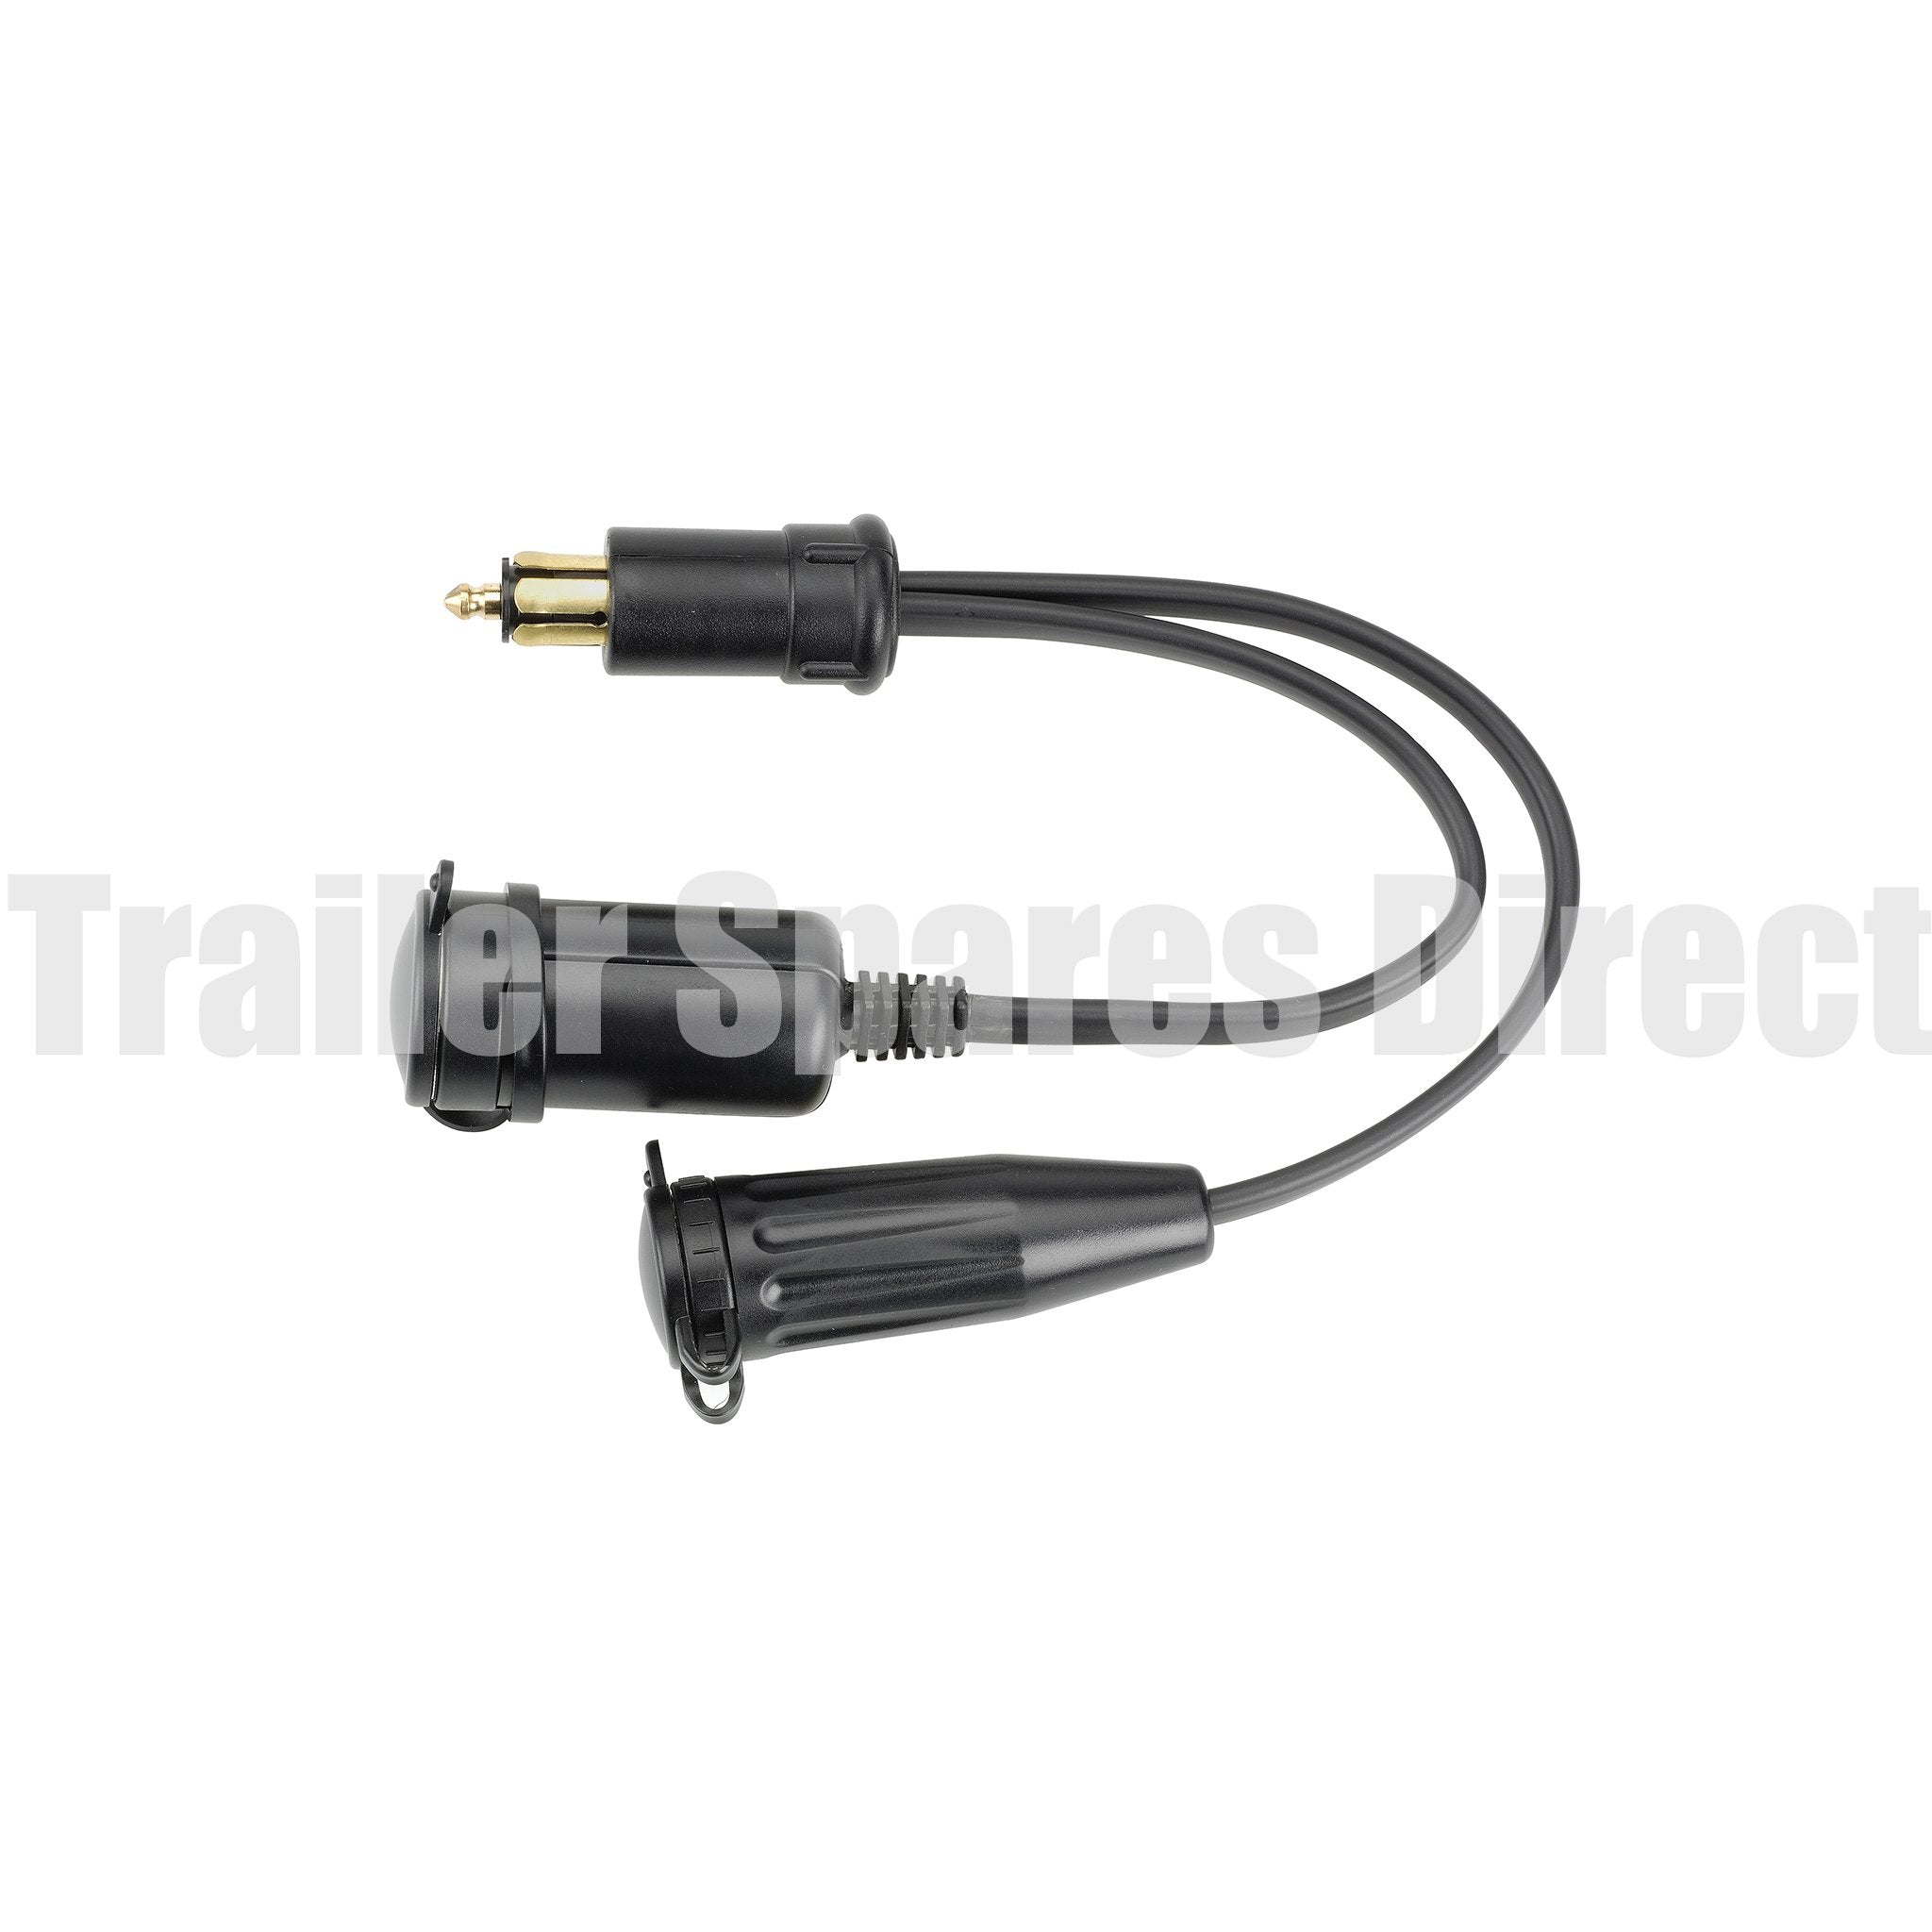 narva adapter - Merit plug to Merit and accessory